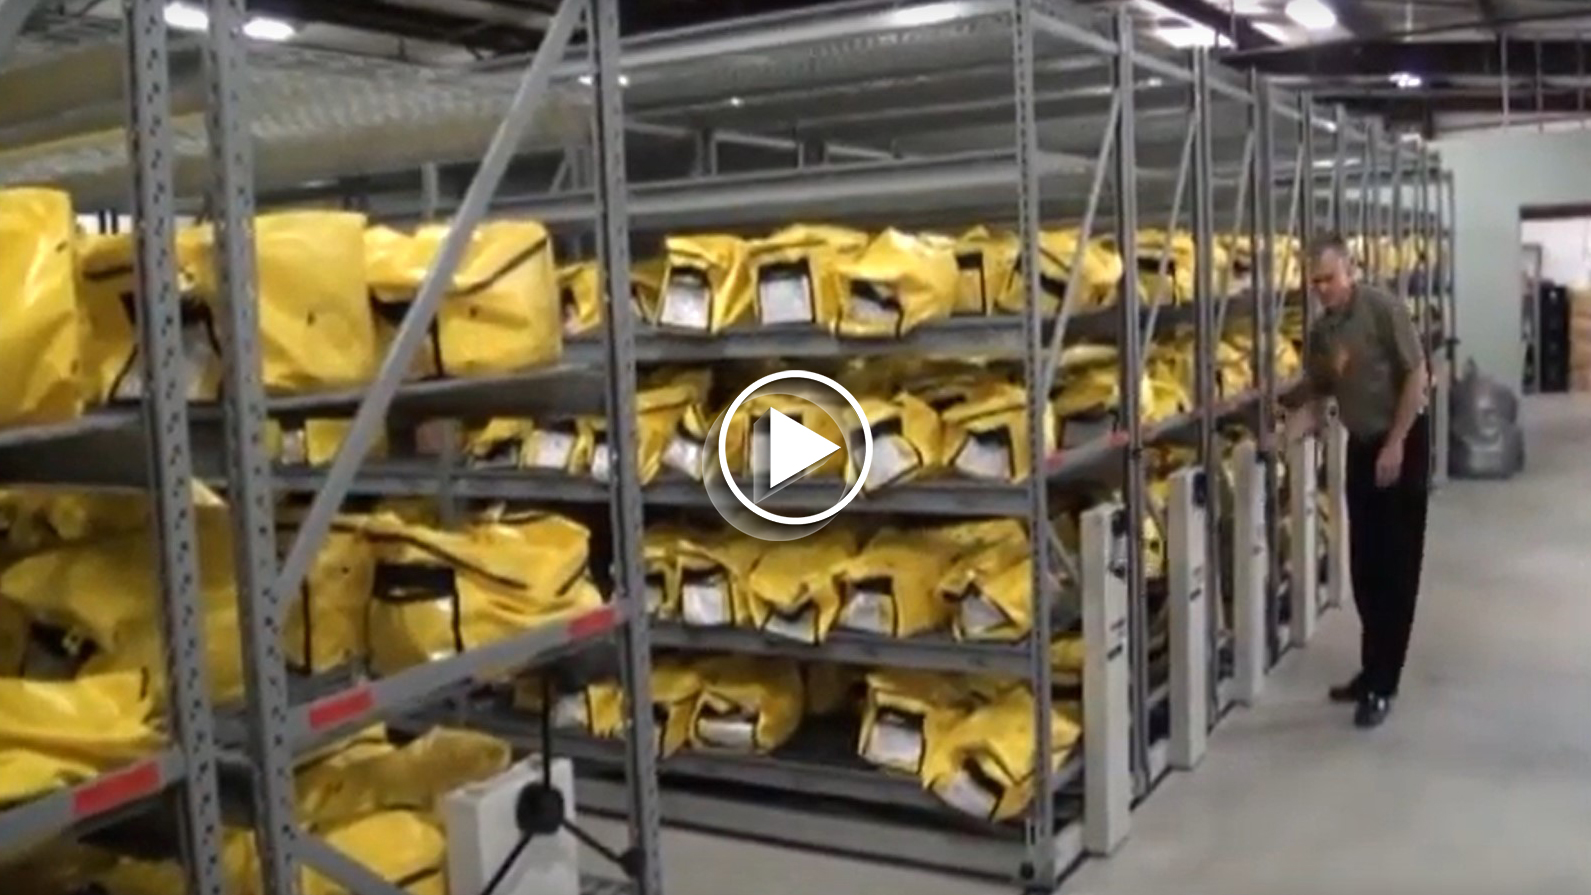 Inmate Property Storage Video